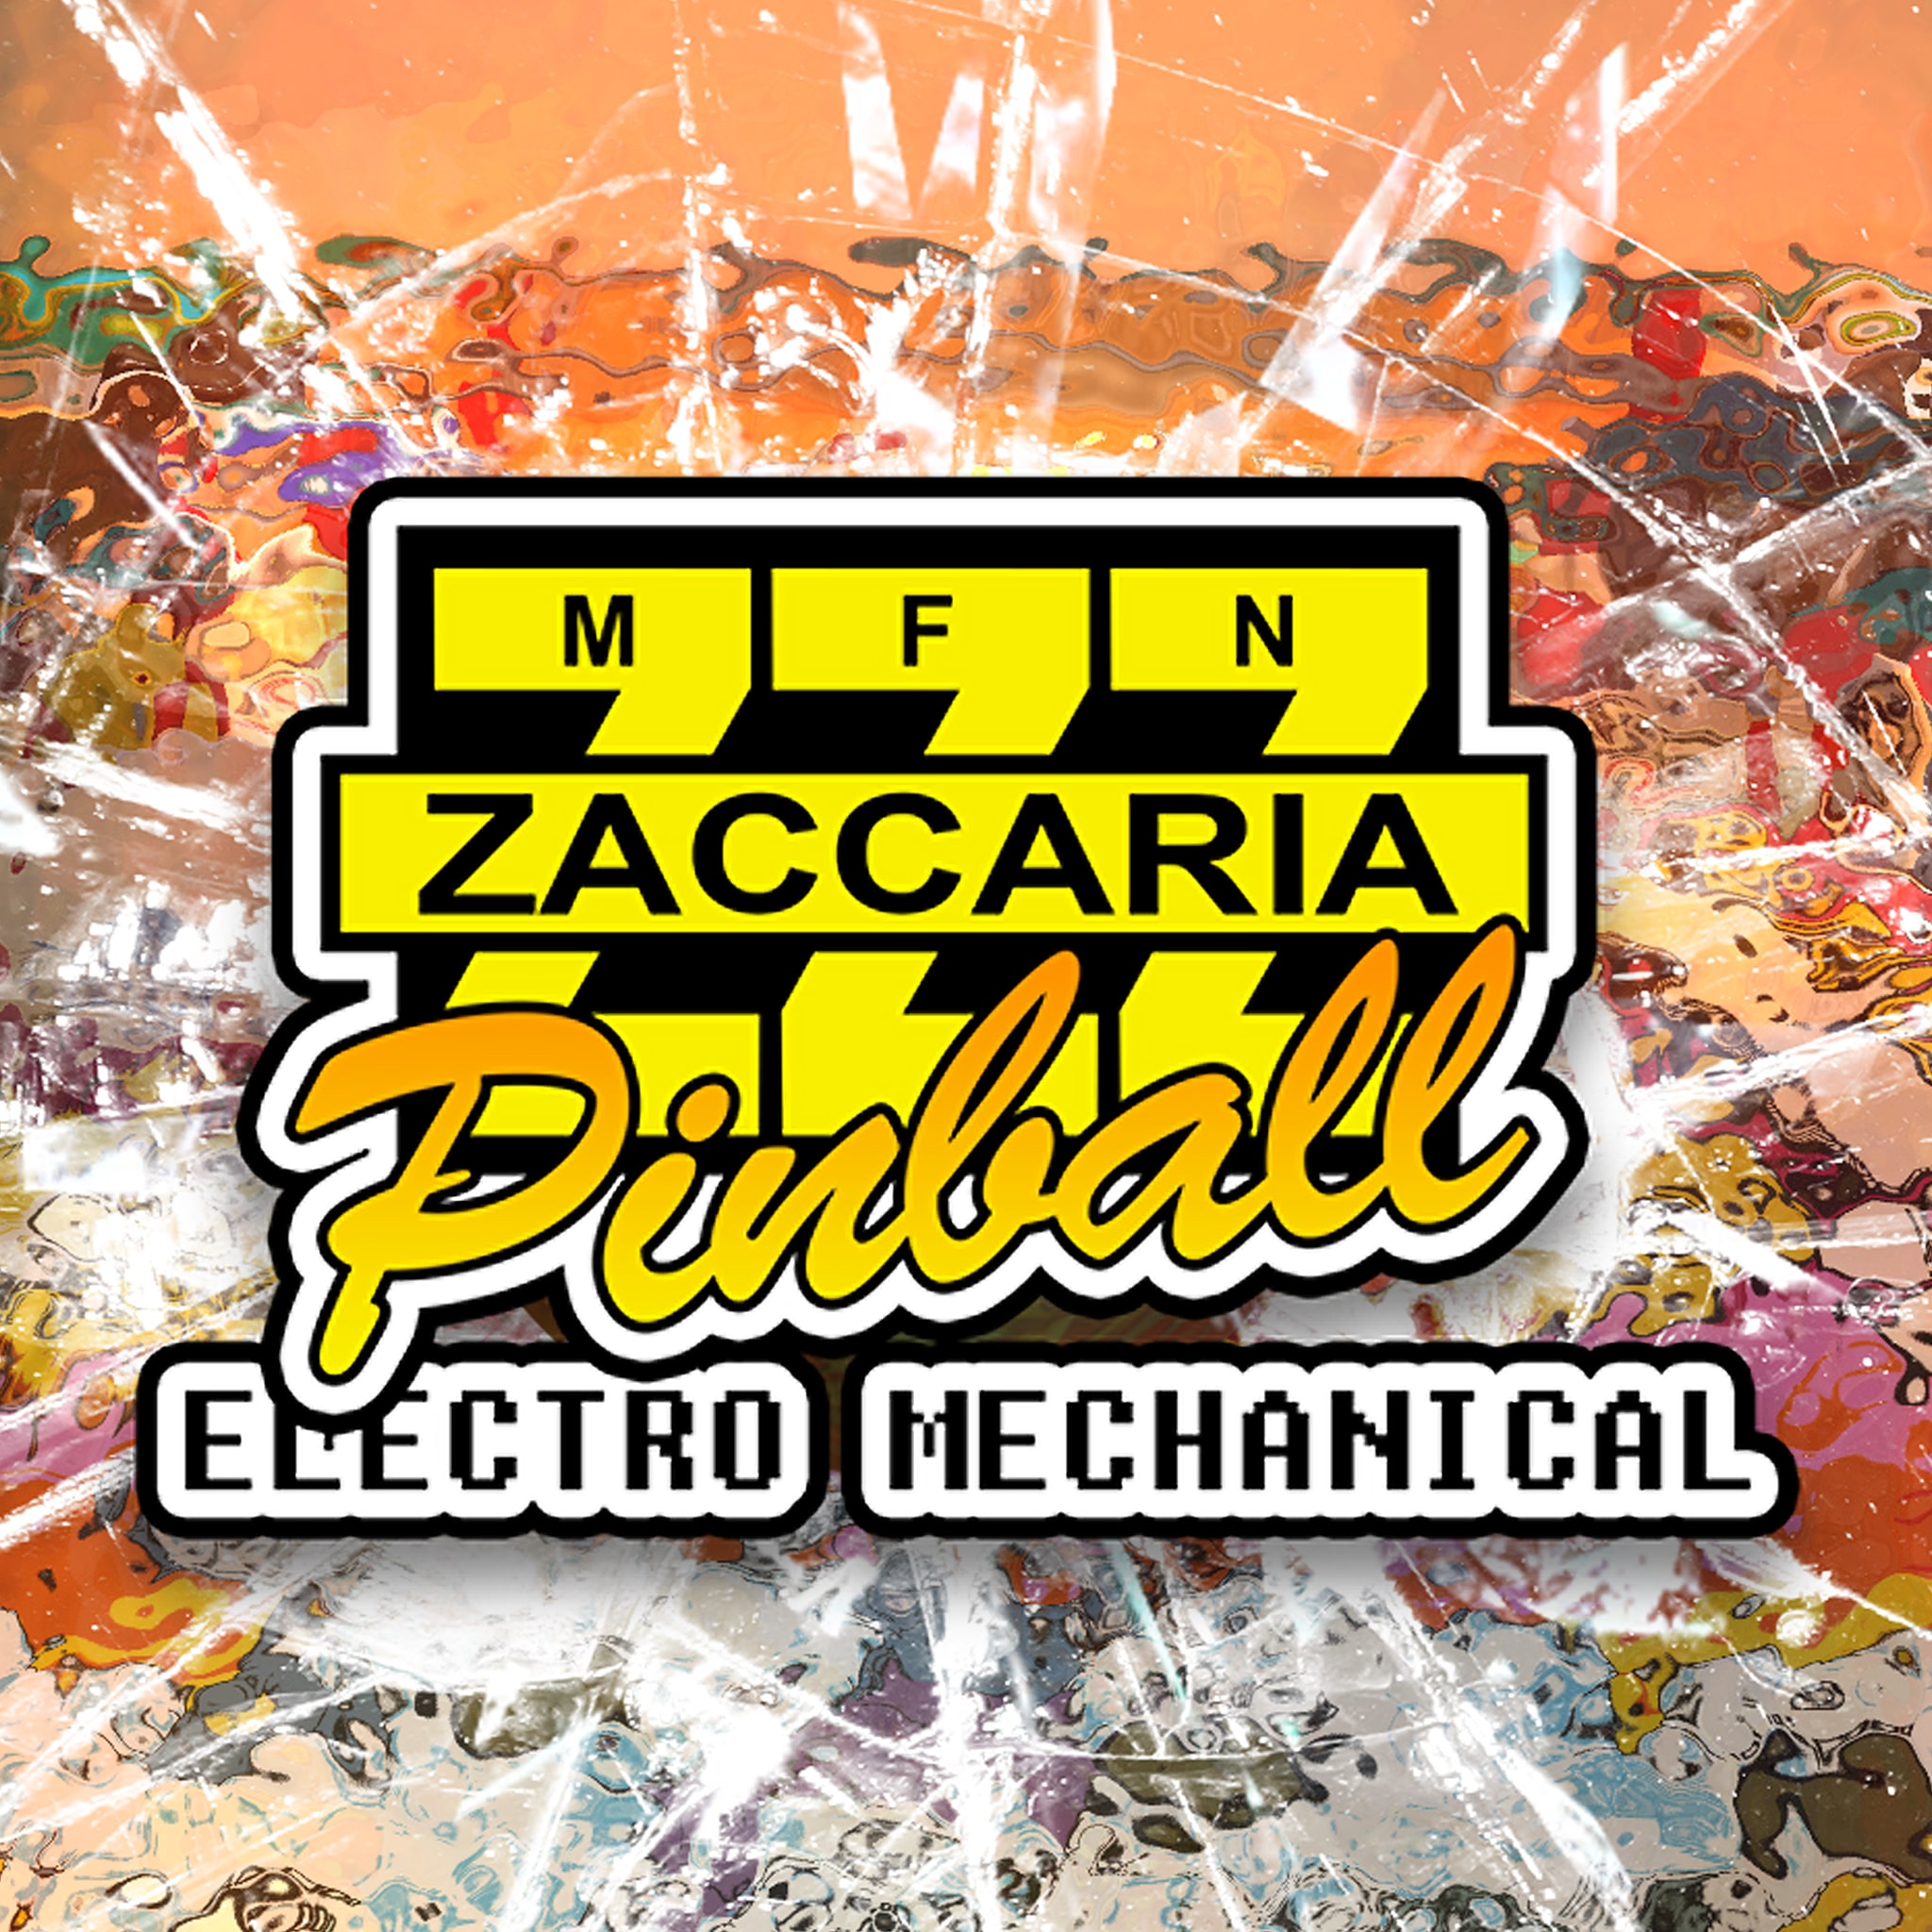 Zaccaria Pinball - Electro-Mechanical Pack